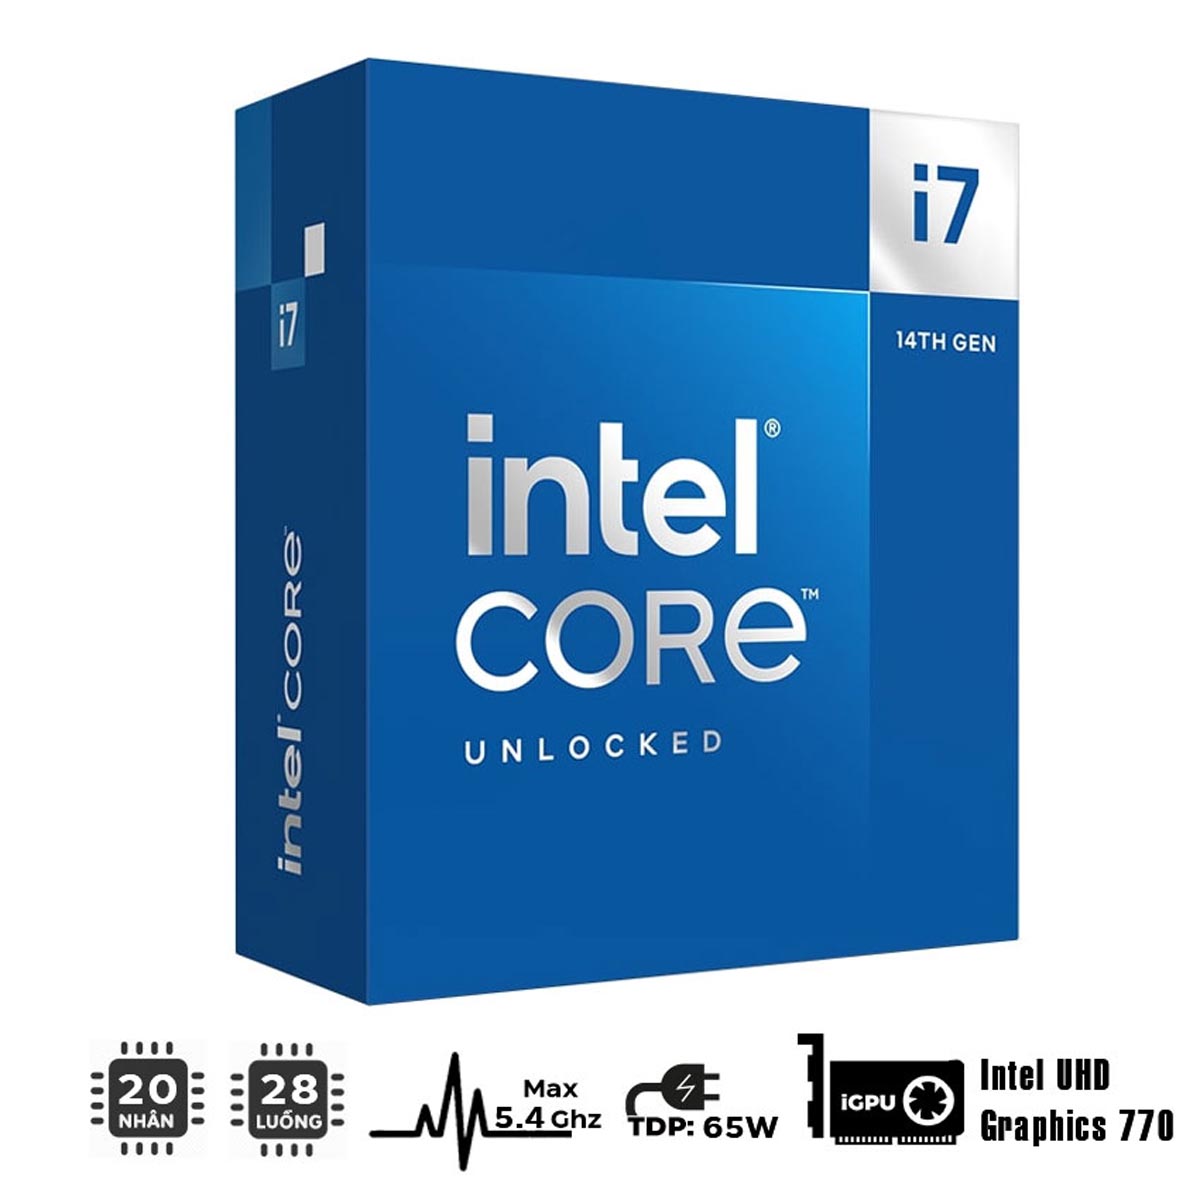 CPU Intel Core i7-14700 (UP TO 5.4GHZ, 20 NHÂN 28 LUỒNG, 33MB CACHE, 65W) - SOCKET INTEL LGA 1700/RAPTOR LAKE